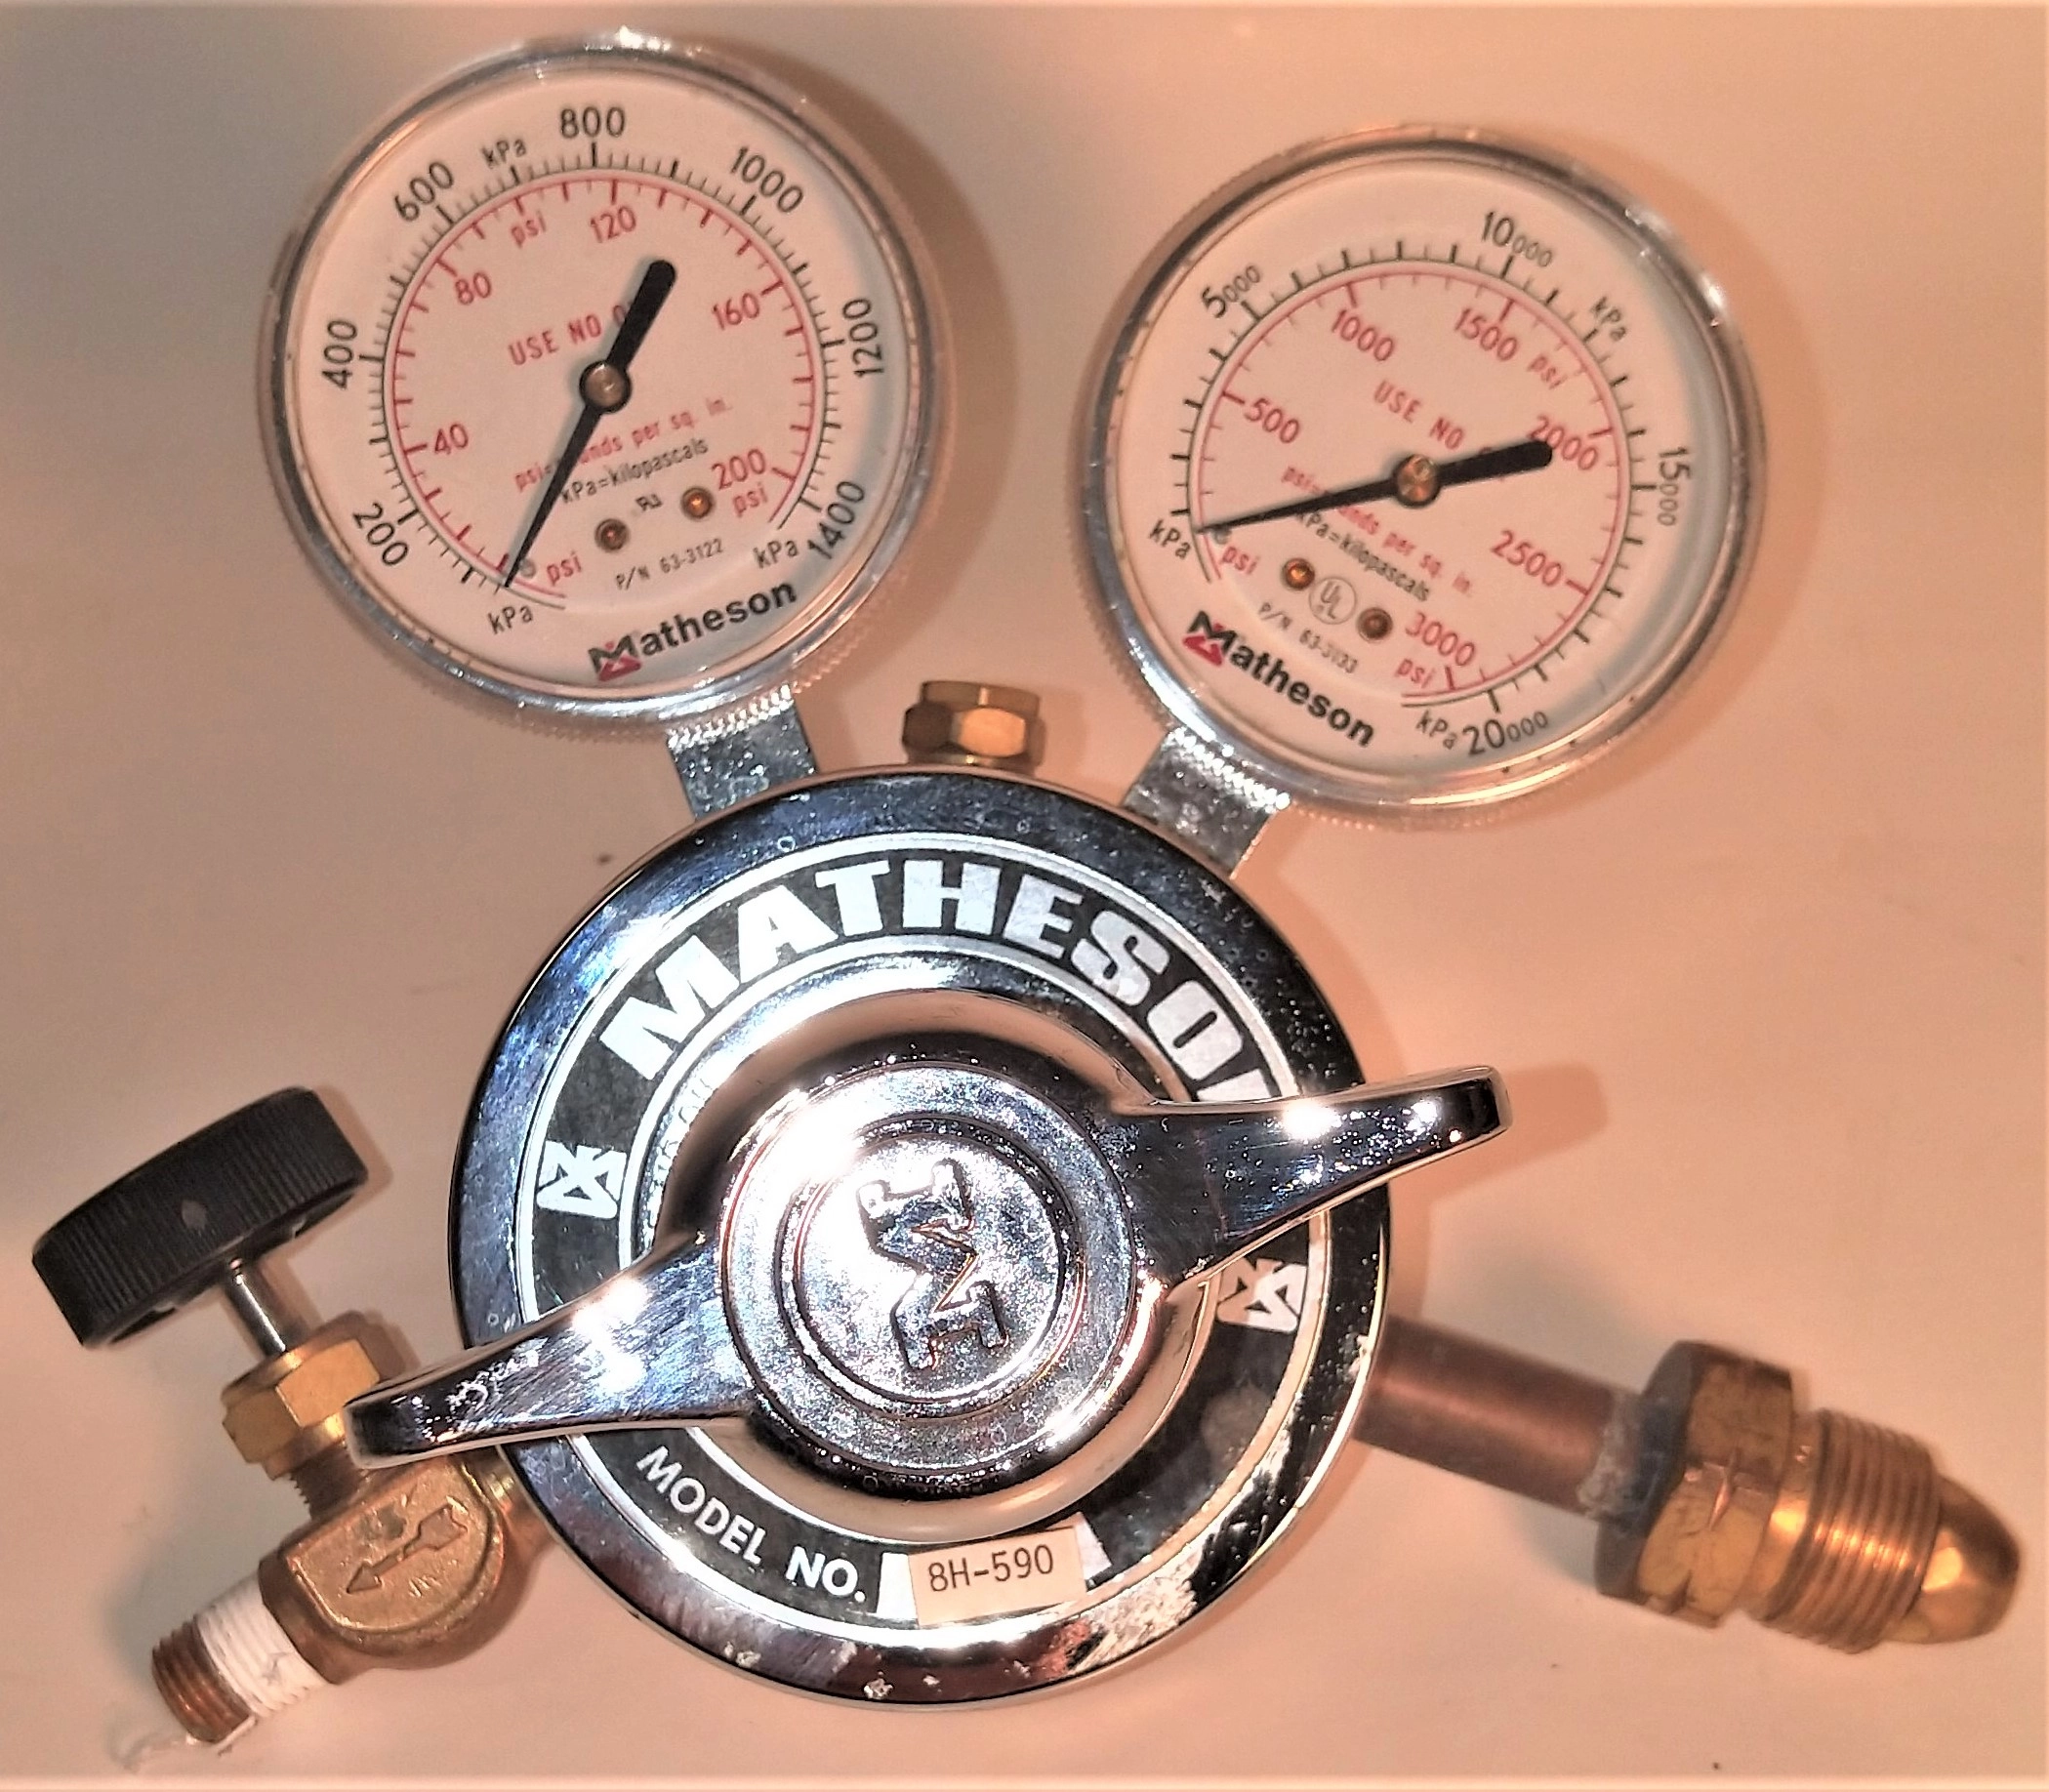 Matheson 8H-590 (100S) Brass Gas Regulator - CGA 590